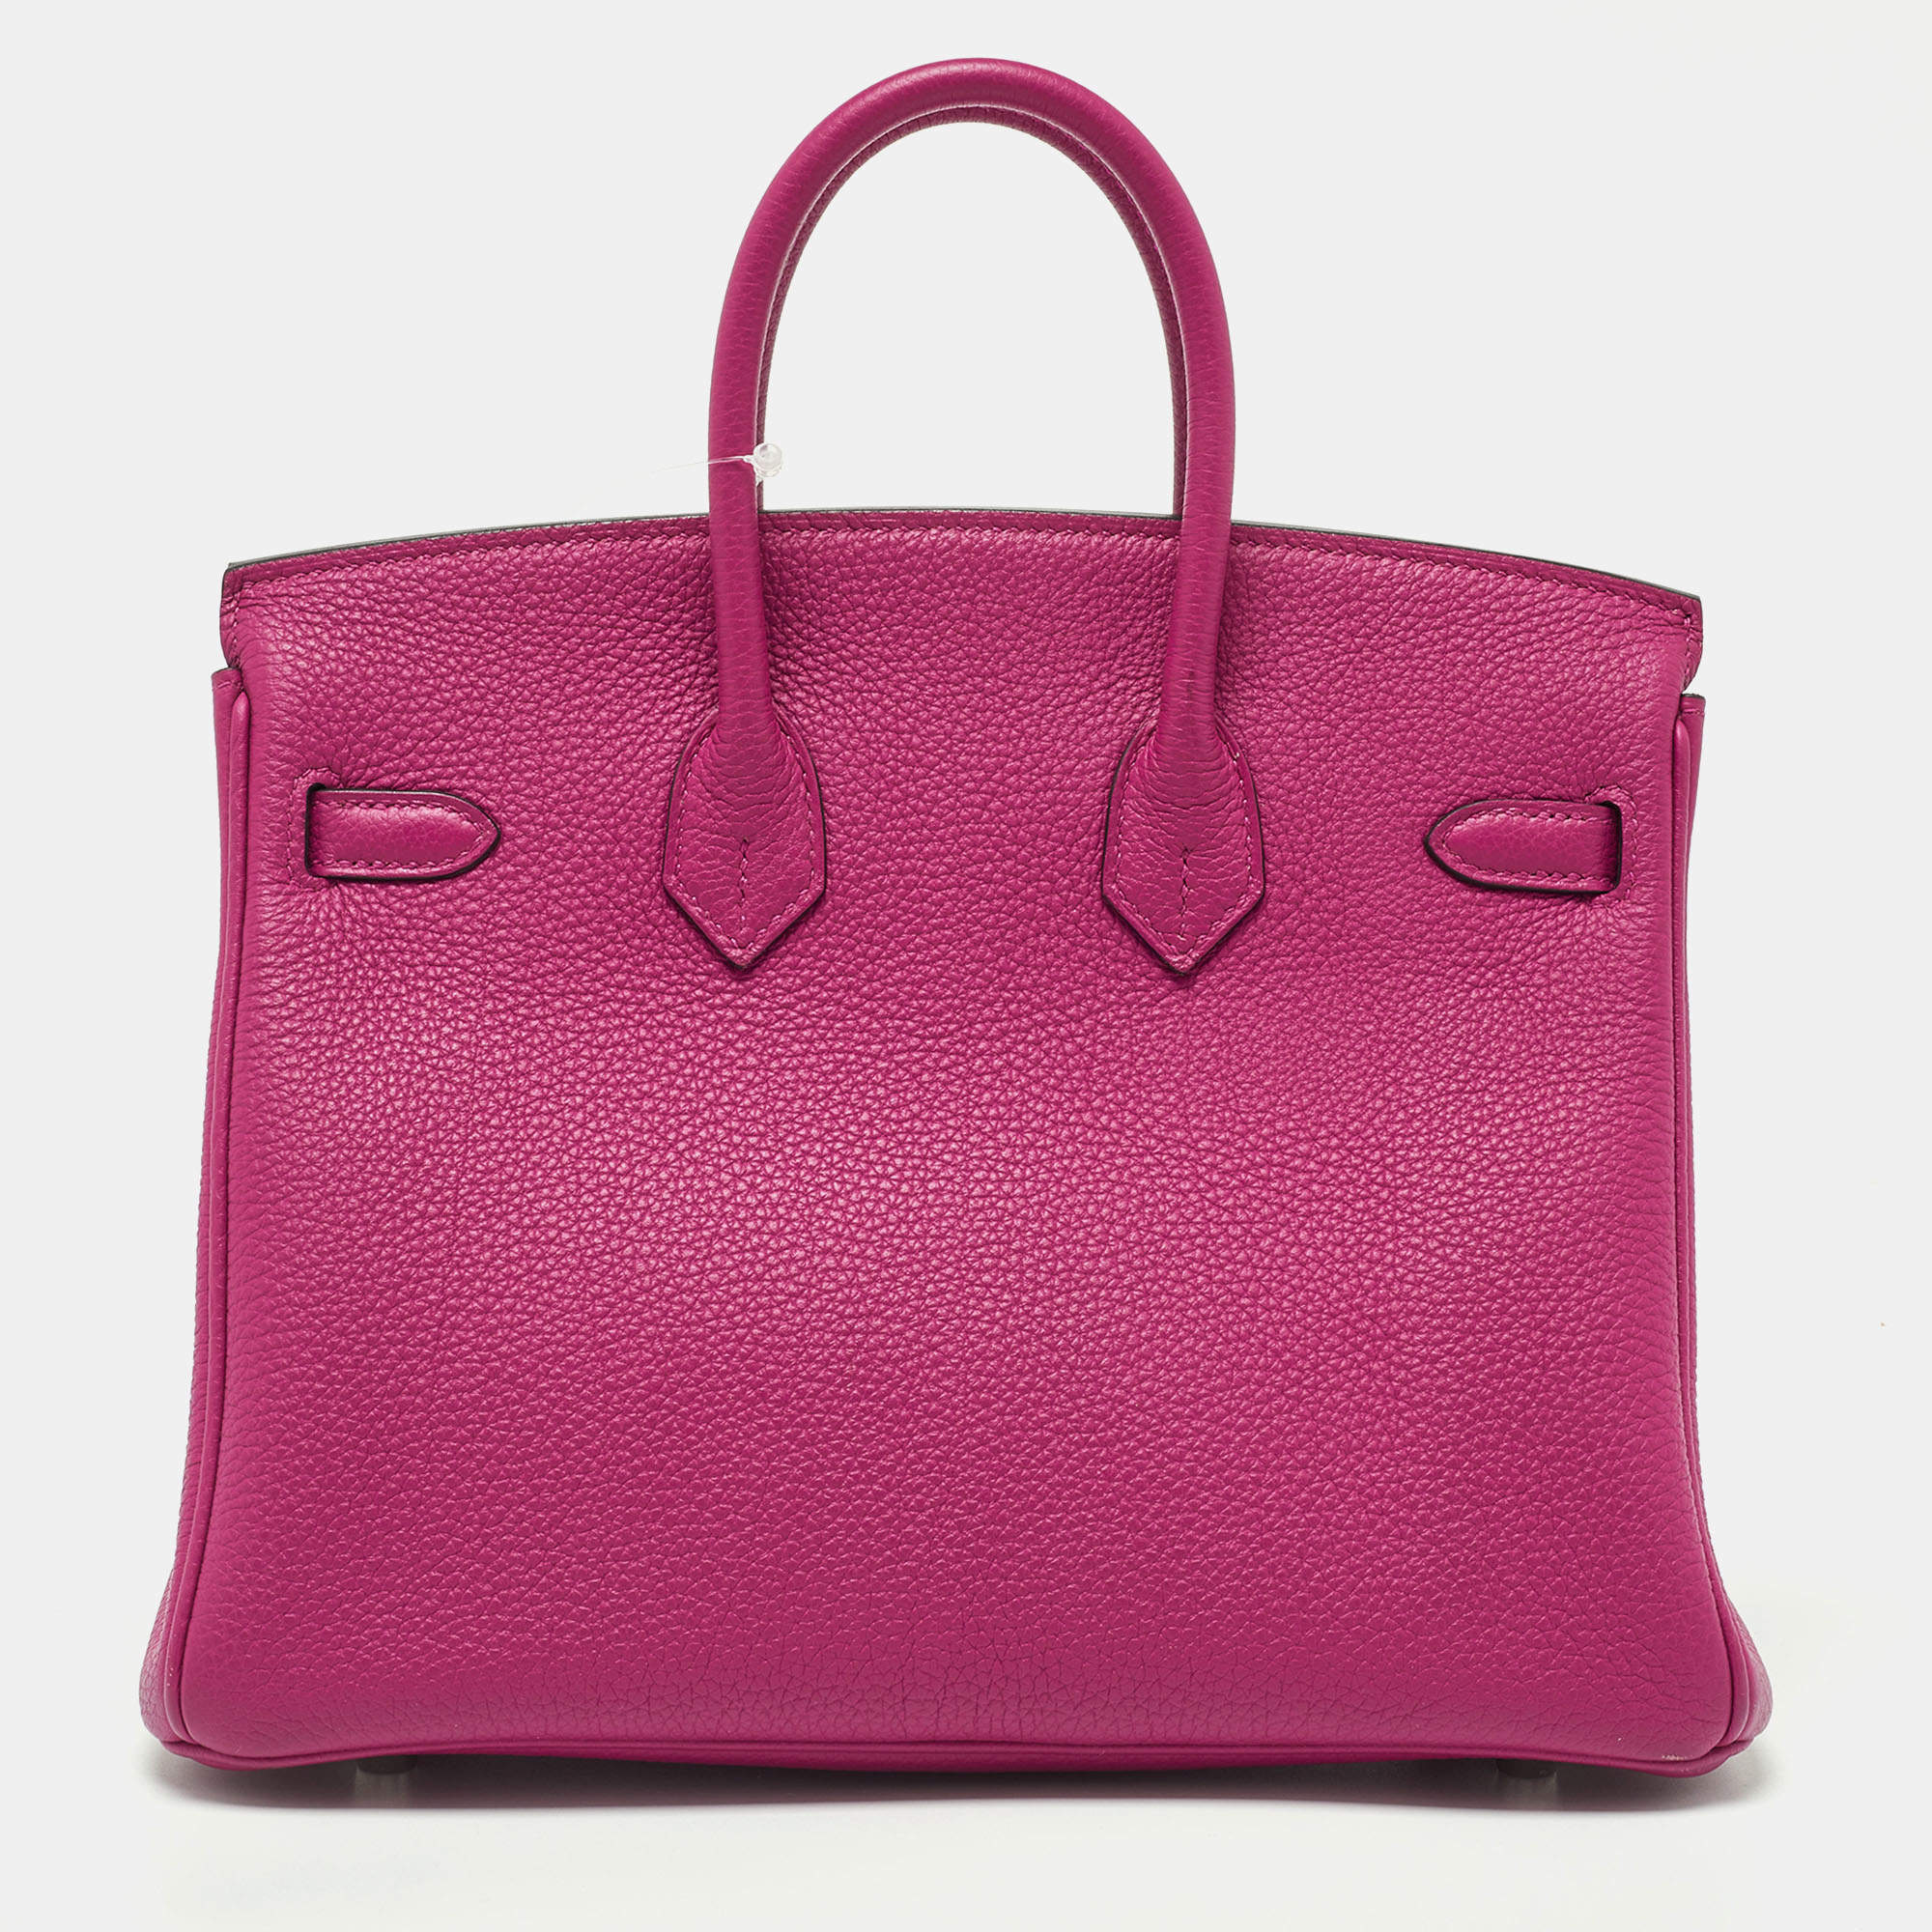 BIRKIN FUCHSIA 25CM - Bags Of Luxury